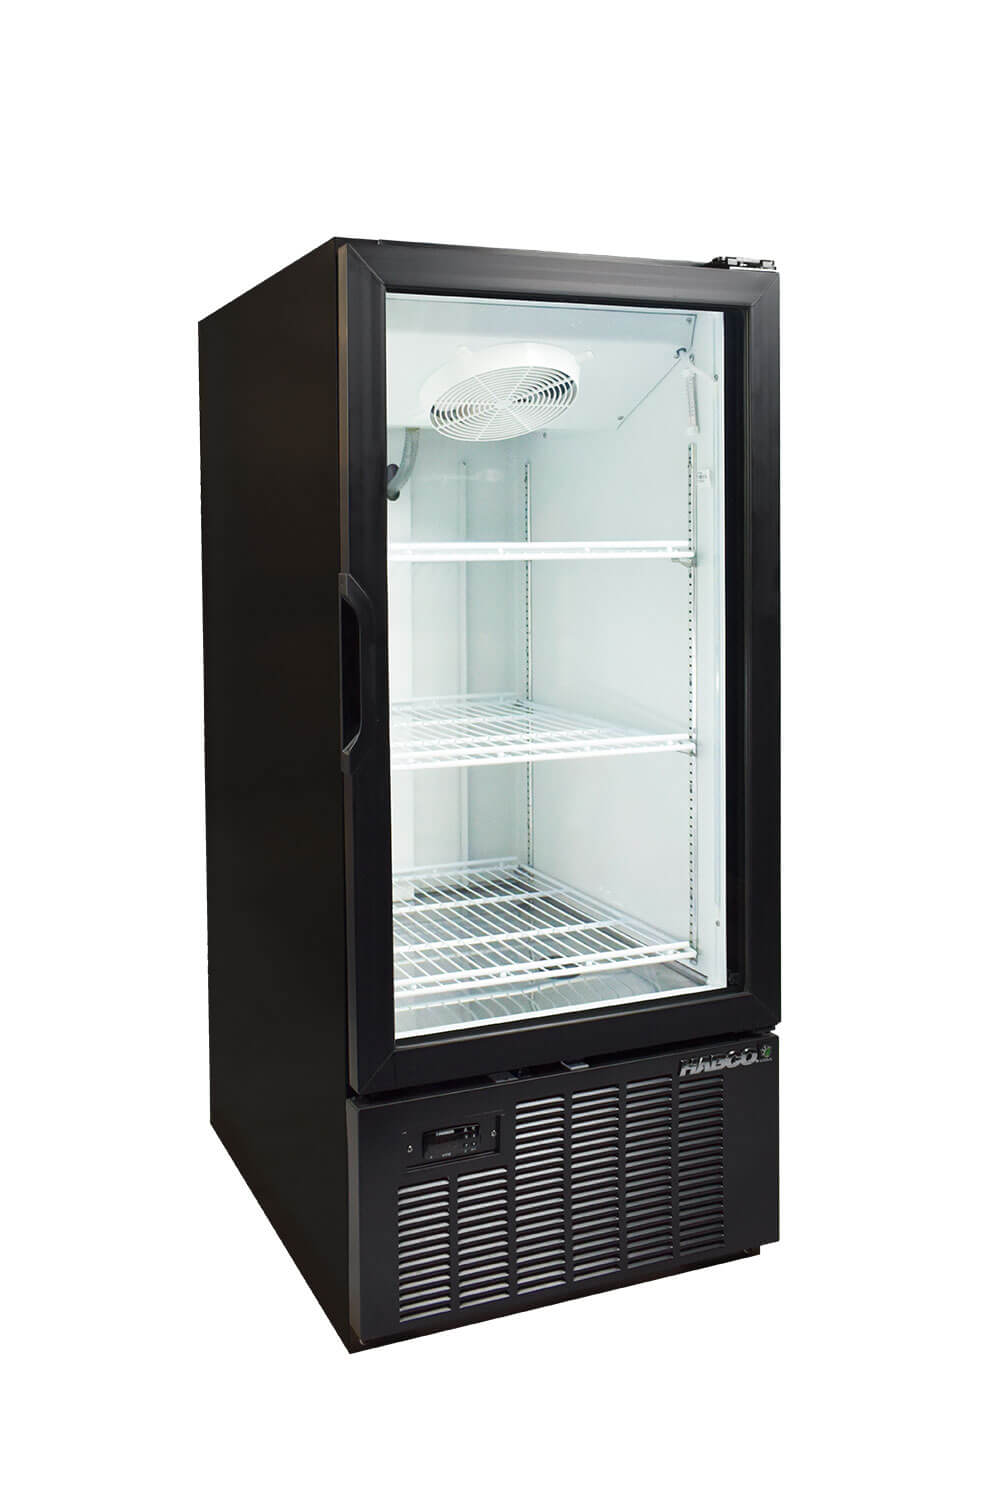 Habco commercial display freezer